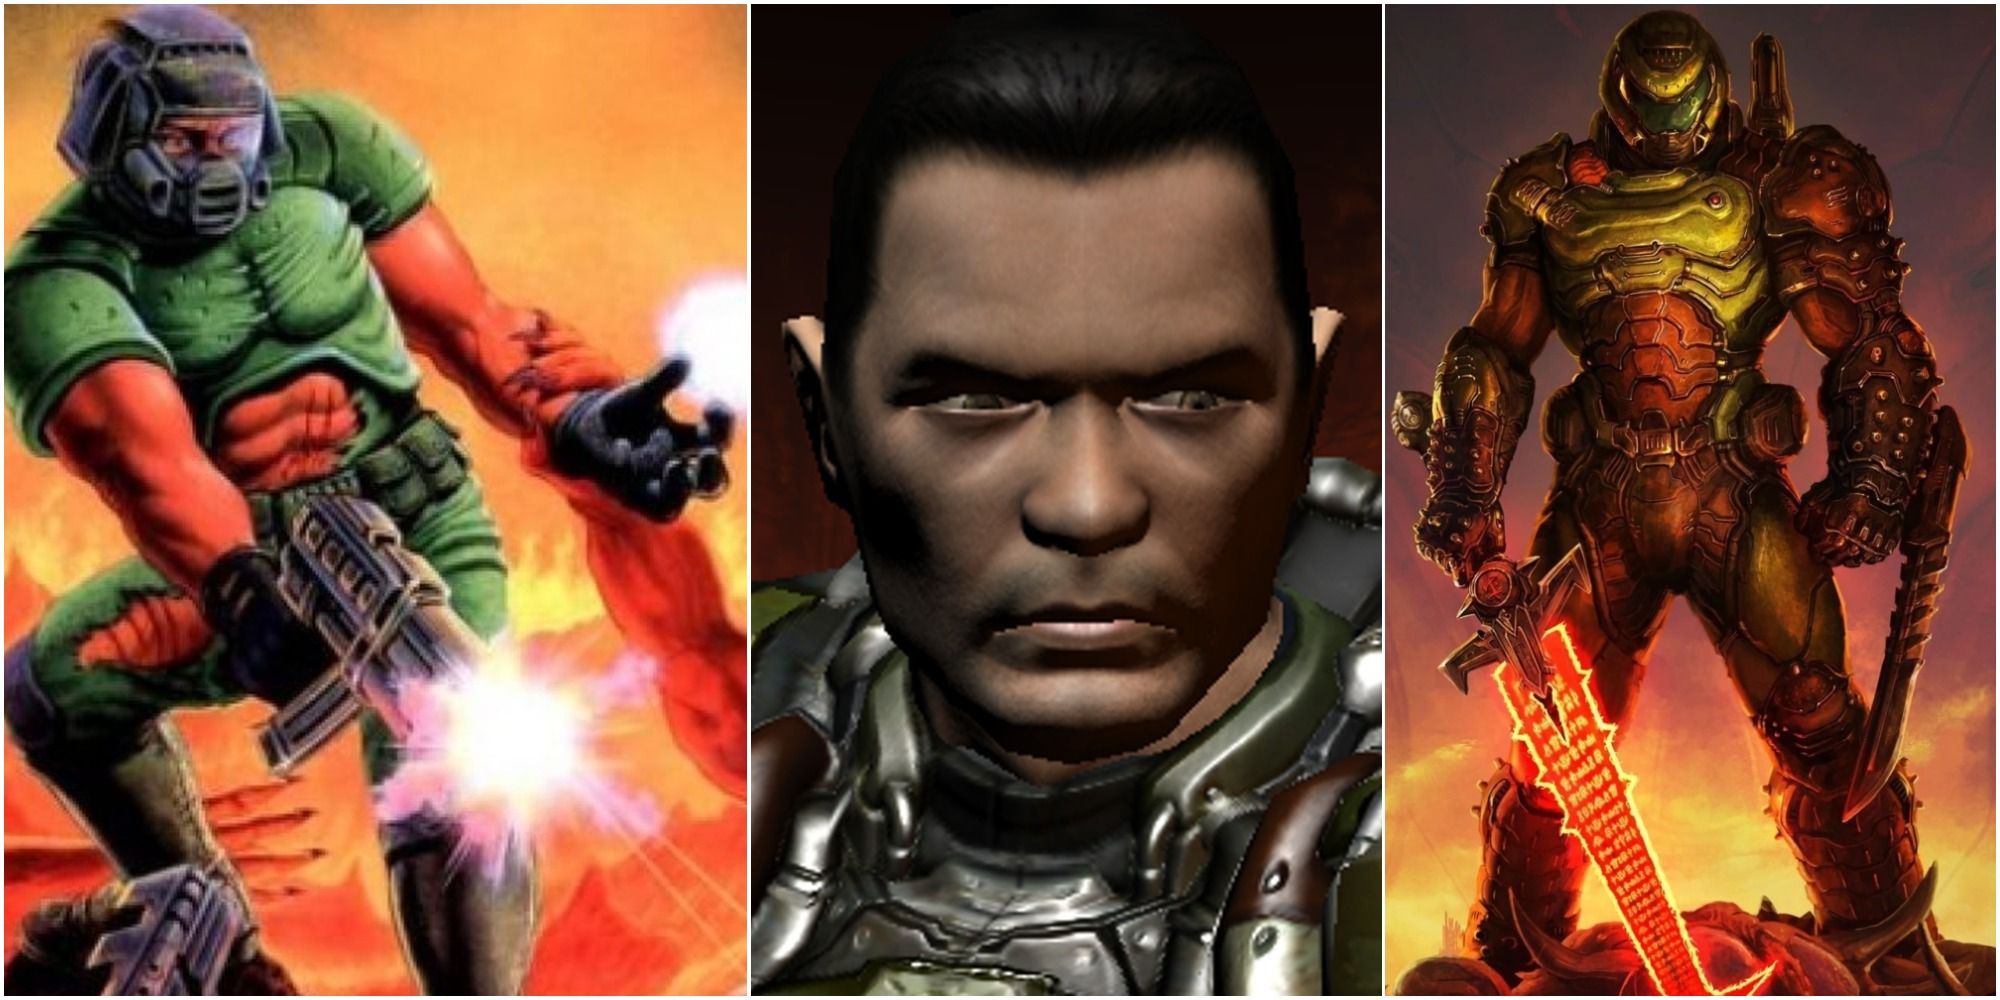 Doom: The Doom Marine From Doom, Bravo Team Marine From Doom 3 and The Slayer In Eternal